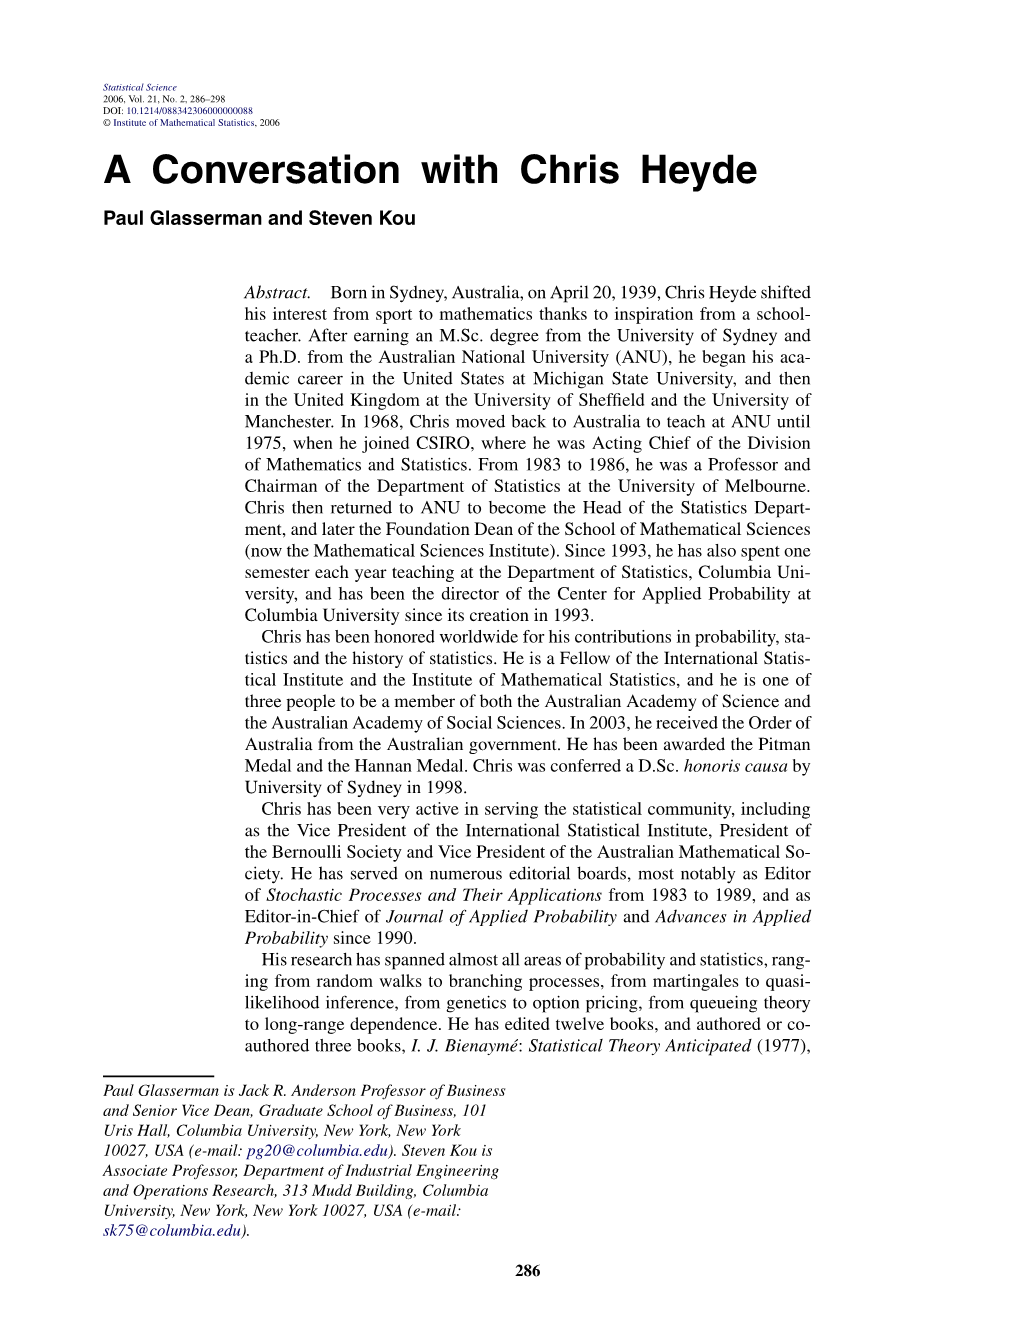 A Conversation with Chris Heyde Paul Glasserman and Steven Kou